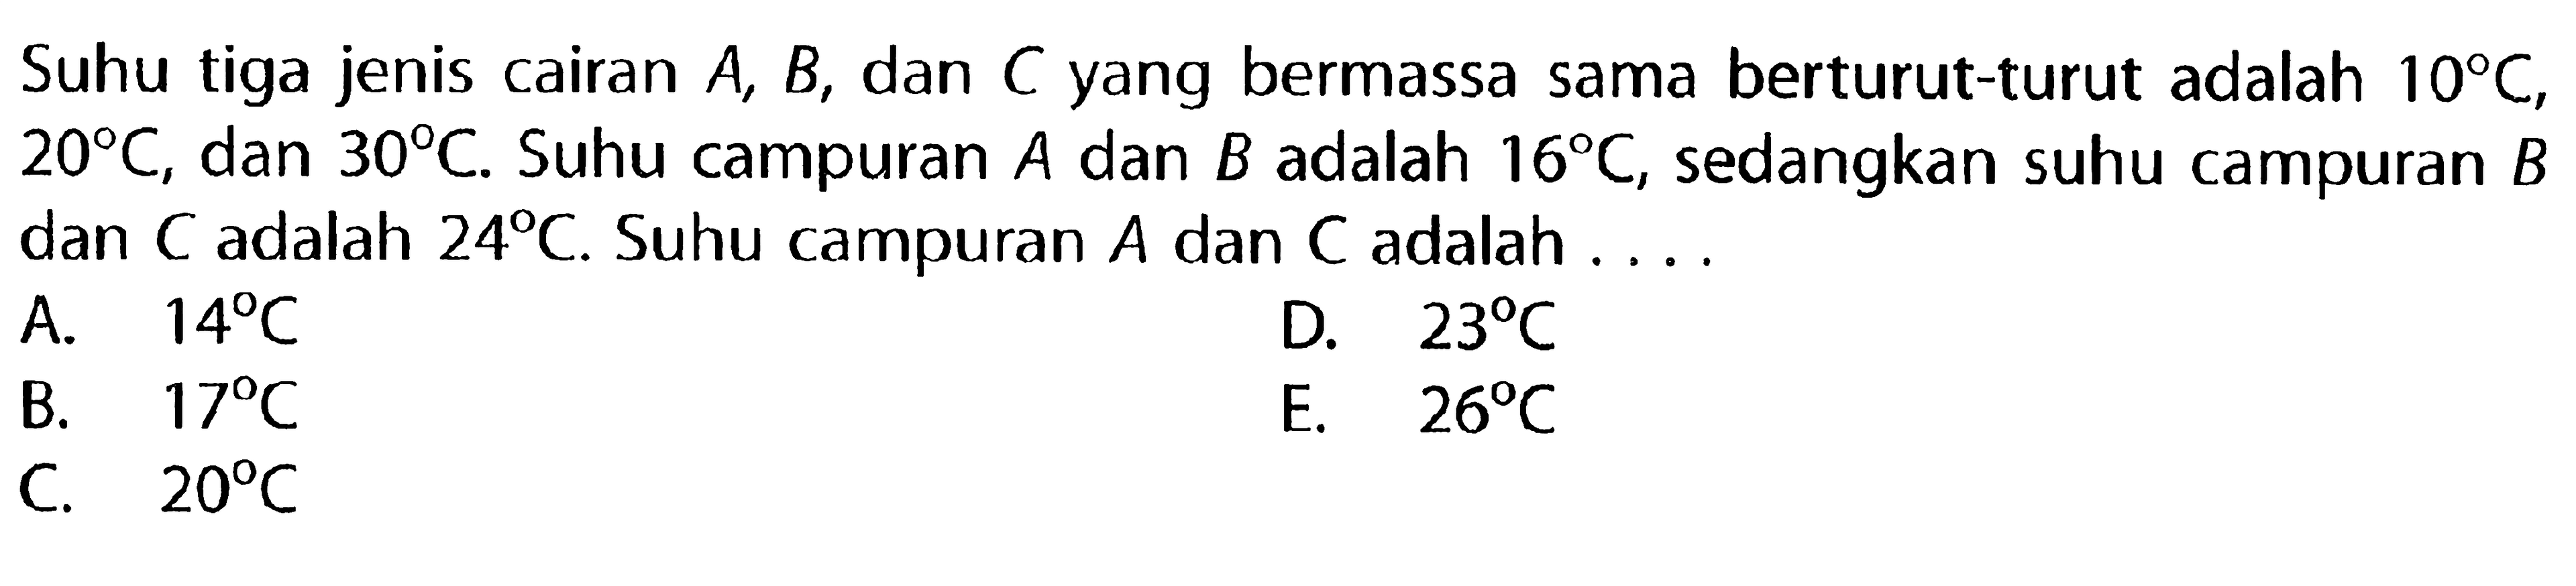 Suhu tiga jenis cairan A, B, dan C yang bermassa sama berturut-turut adalah 10 C, 20 C, dan 30 C. Suhu campuran A dan B adalah 16 C, sedangkan suhu campuran B dan C adalah 24 C. Suhu campuran A dan C adalah . . . .